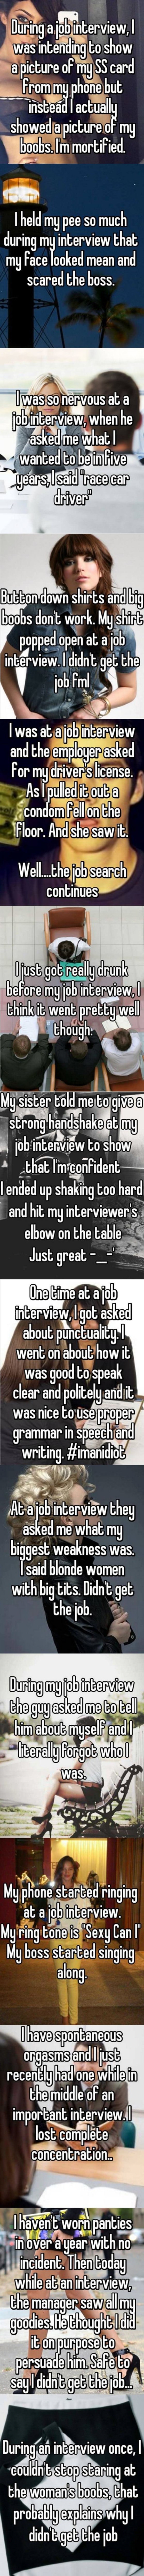 Bad Job Interview Experiences